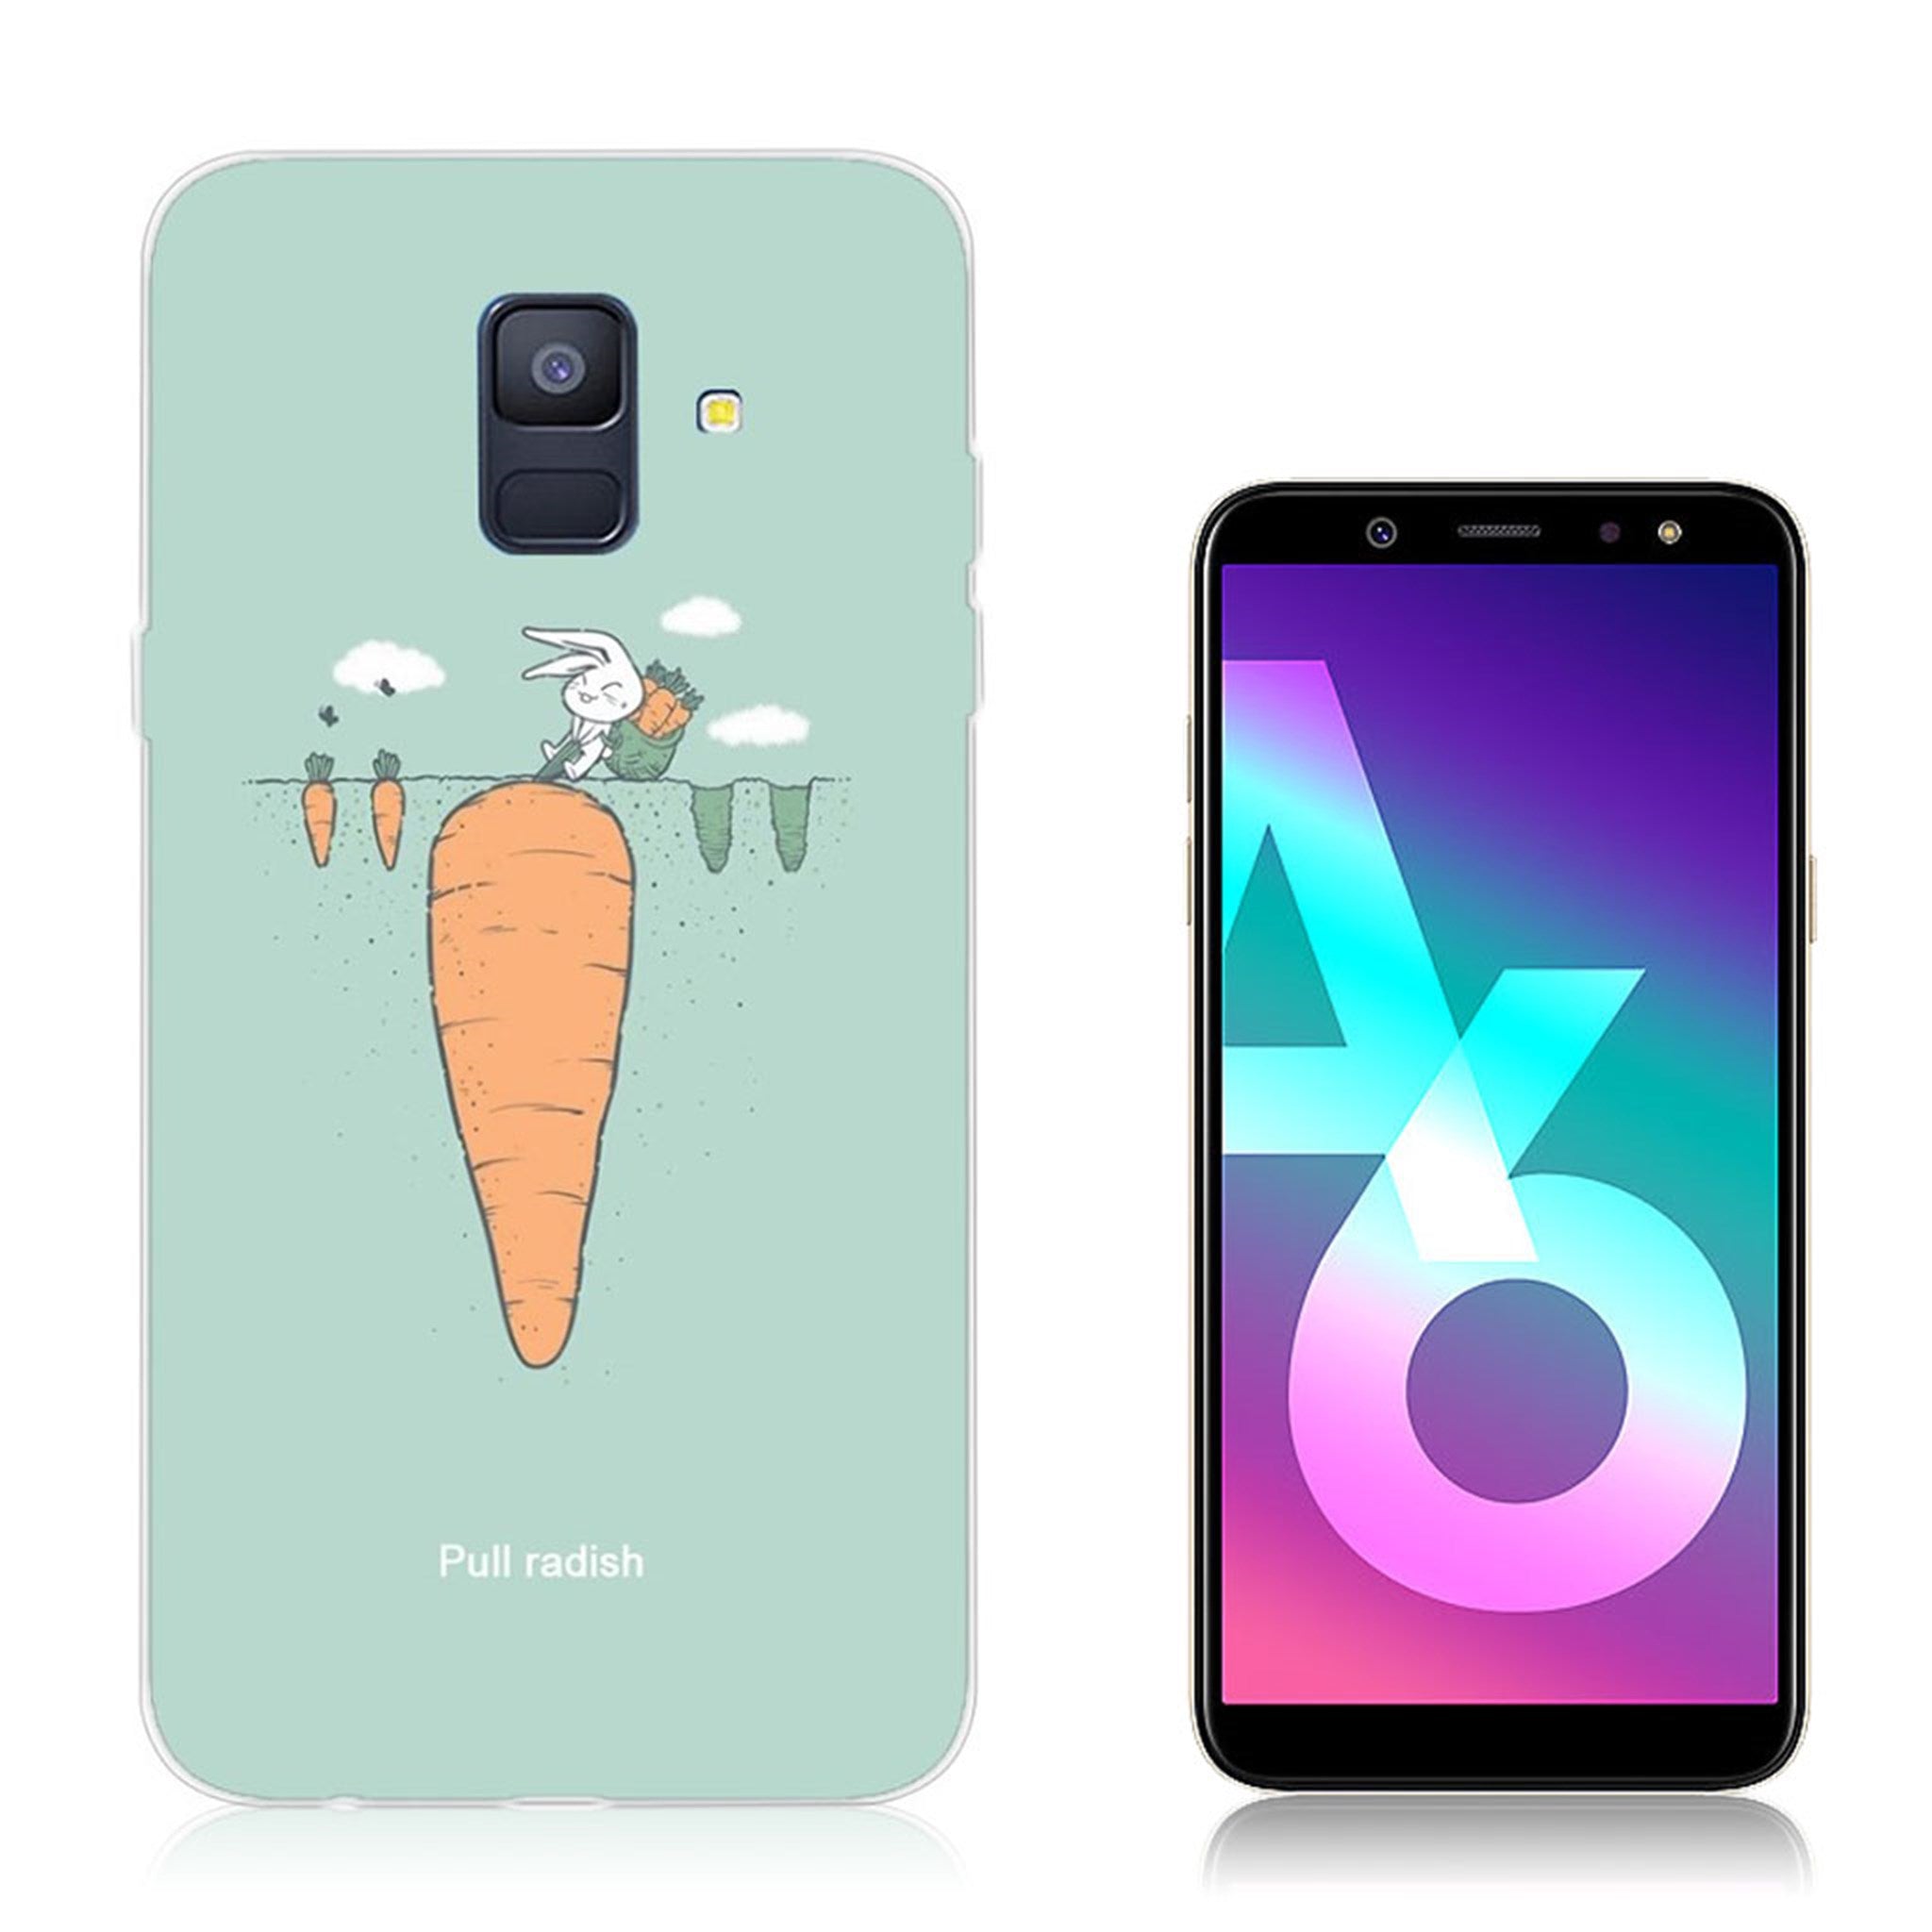 Samsung Galaxy A6 (2018) pattern printing case - Pull Radish